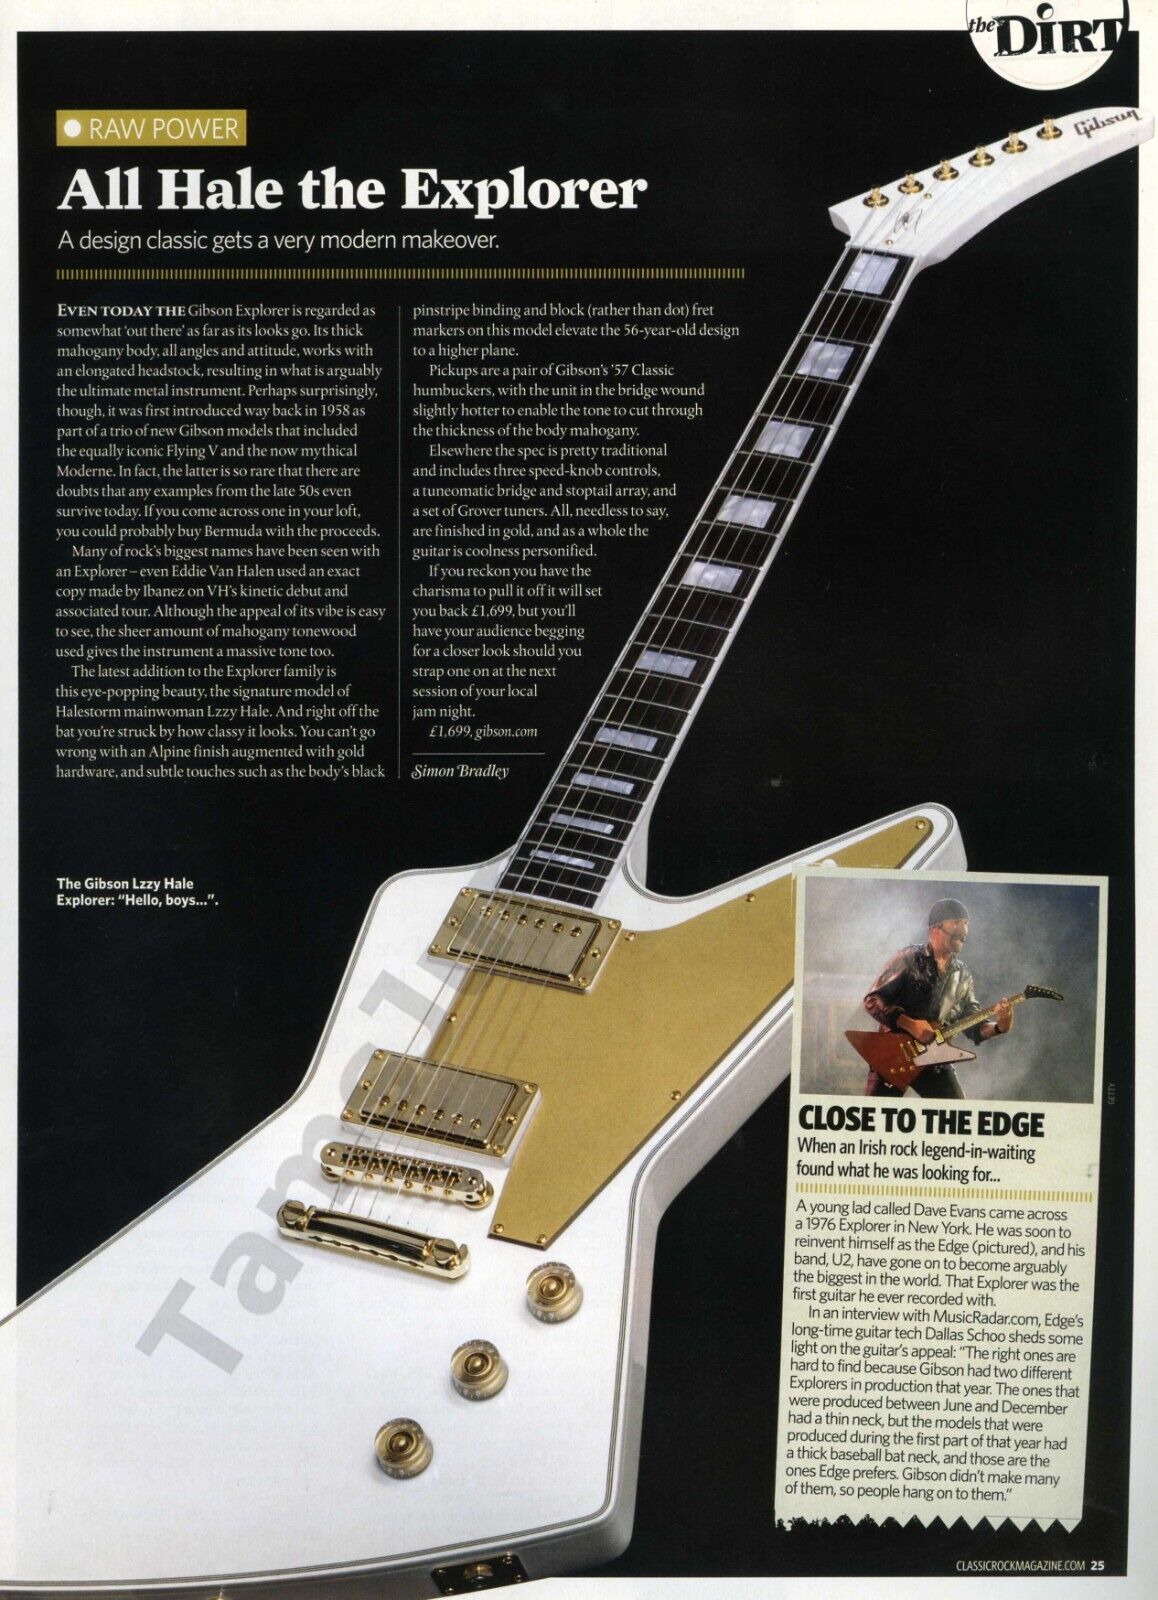 2015 Gibson Explorer Guitar Article PRINT AD by Simon Bradley (1359)